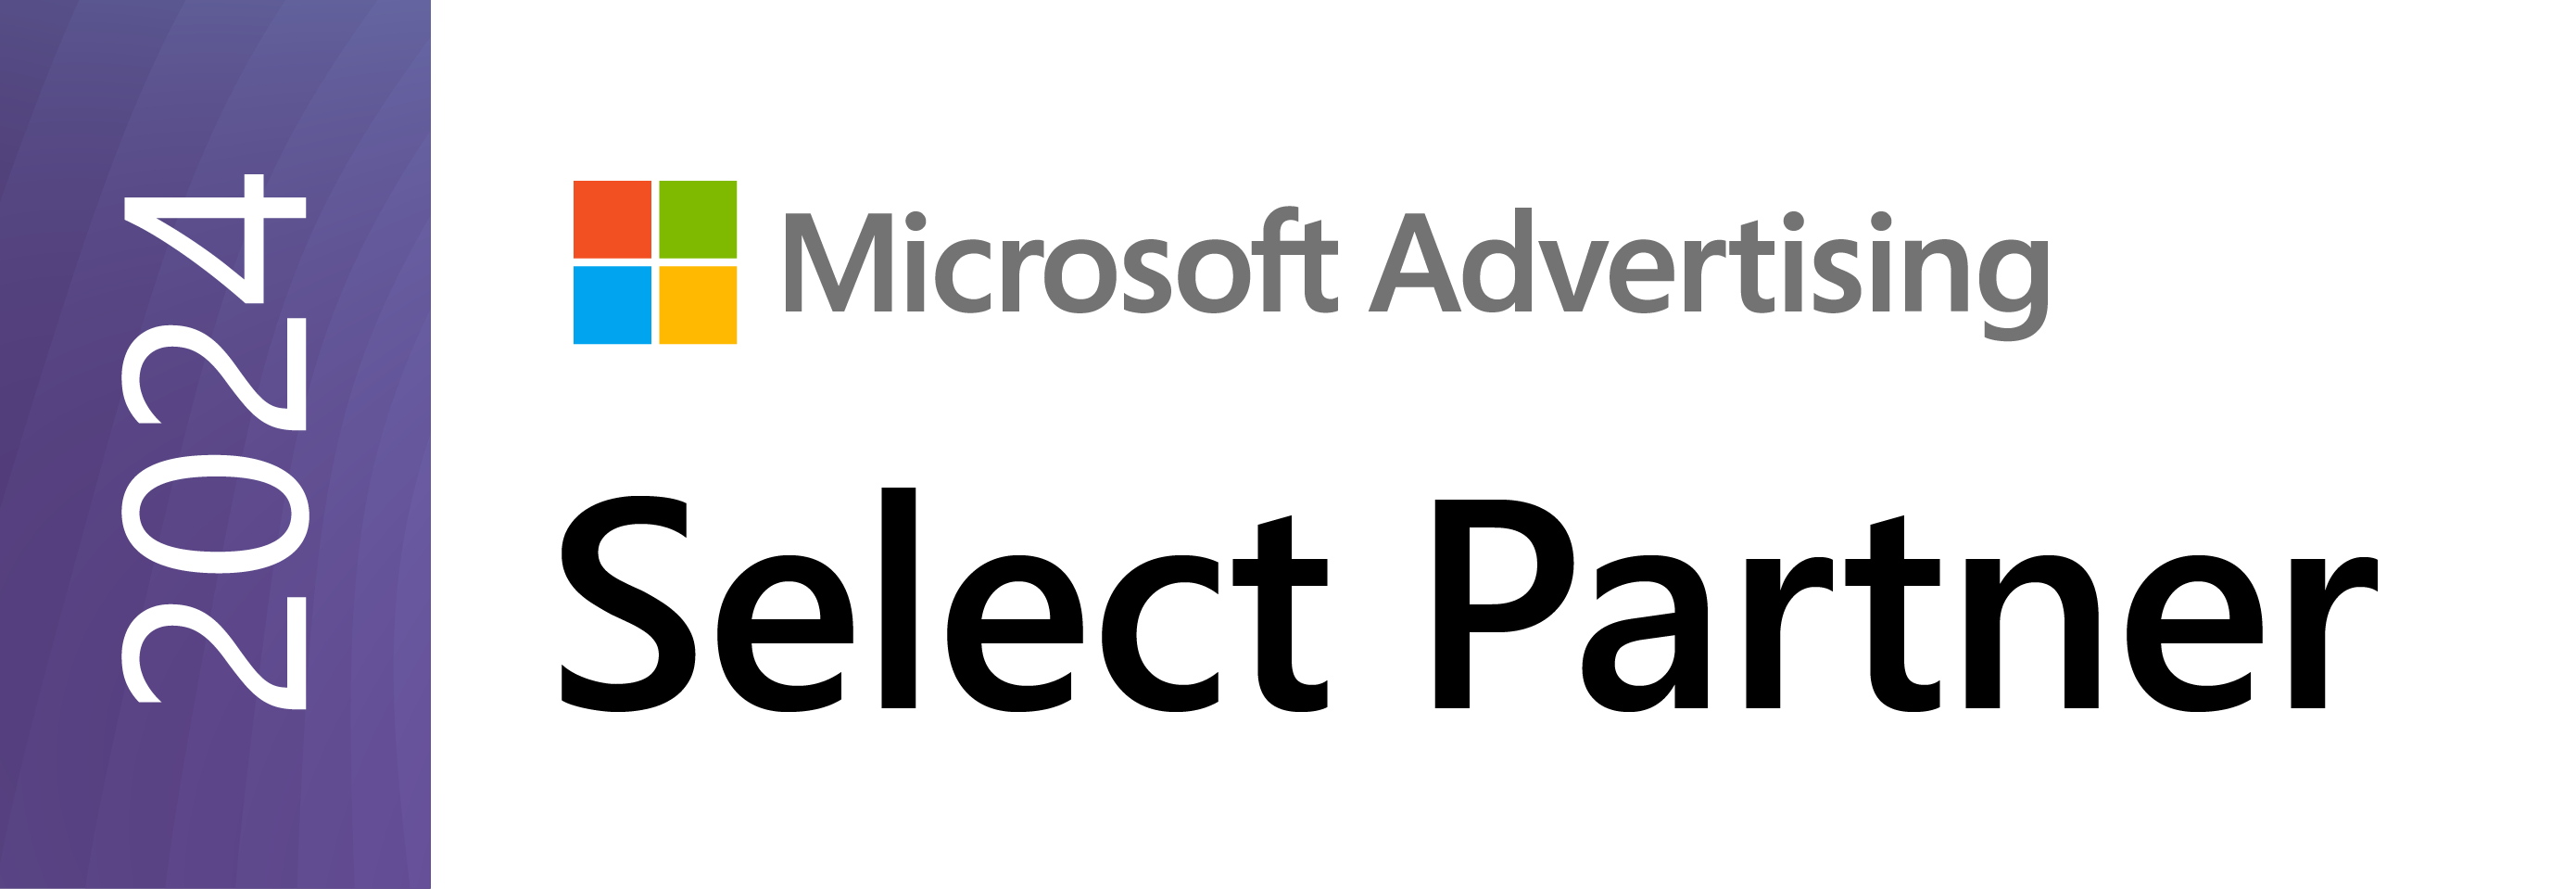 Microsoft Advertising Partnerr